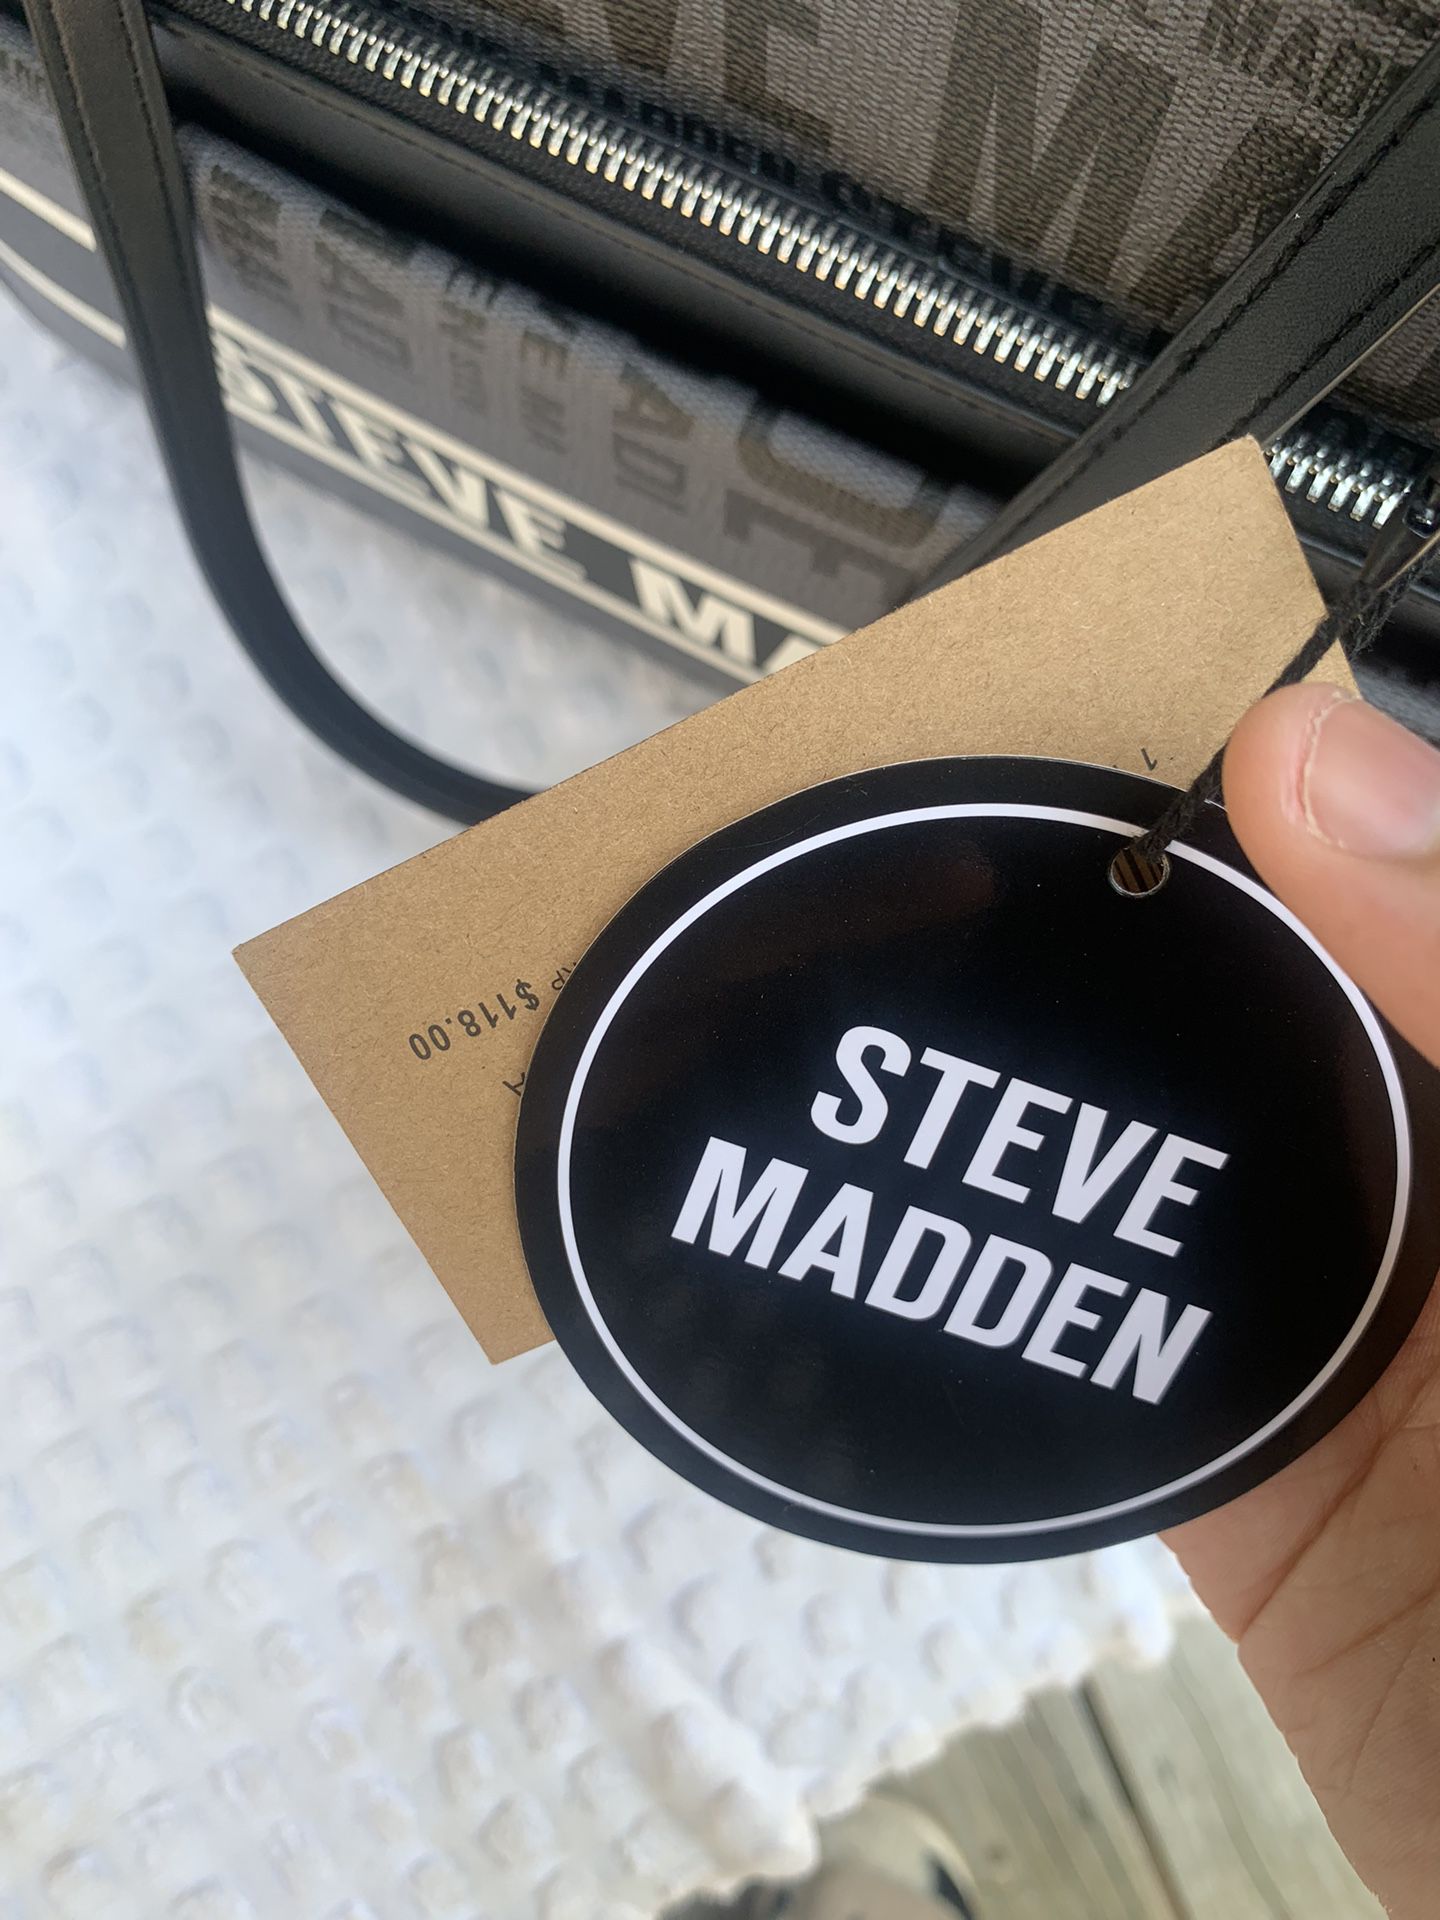 Steve Madden Tote Bag for Sale in Mesa, AZ - OfferUp